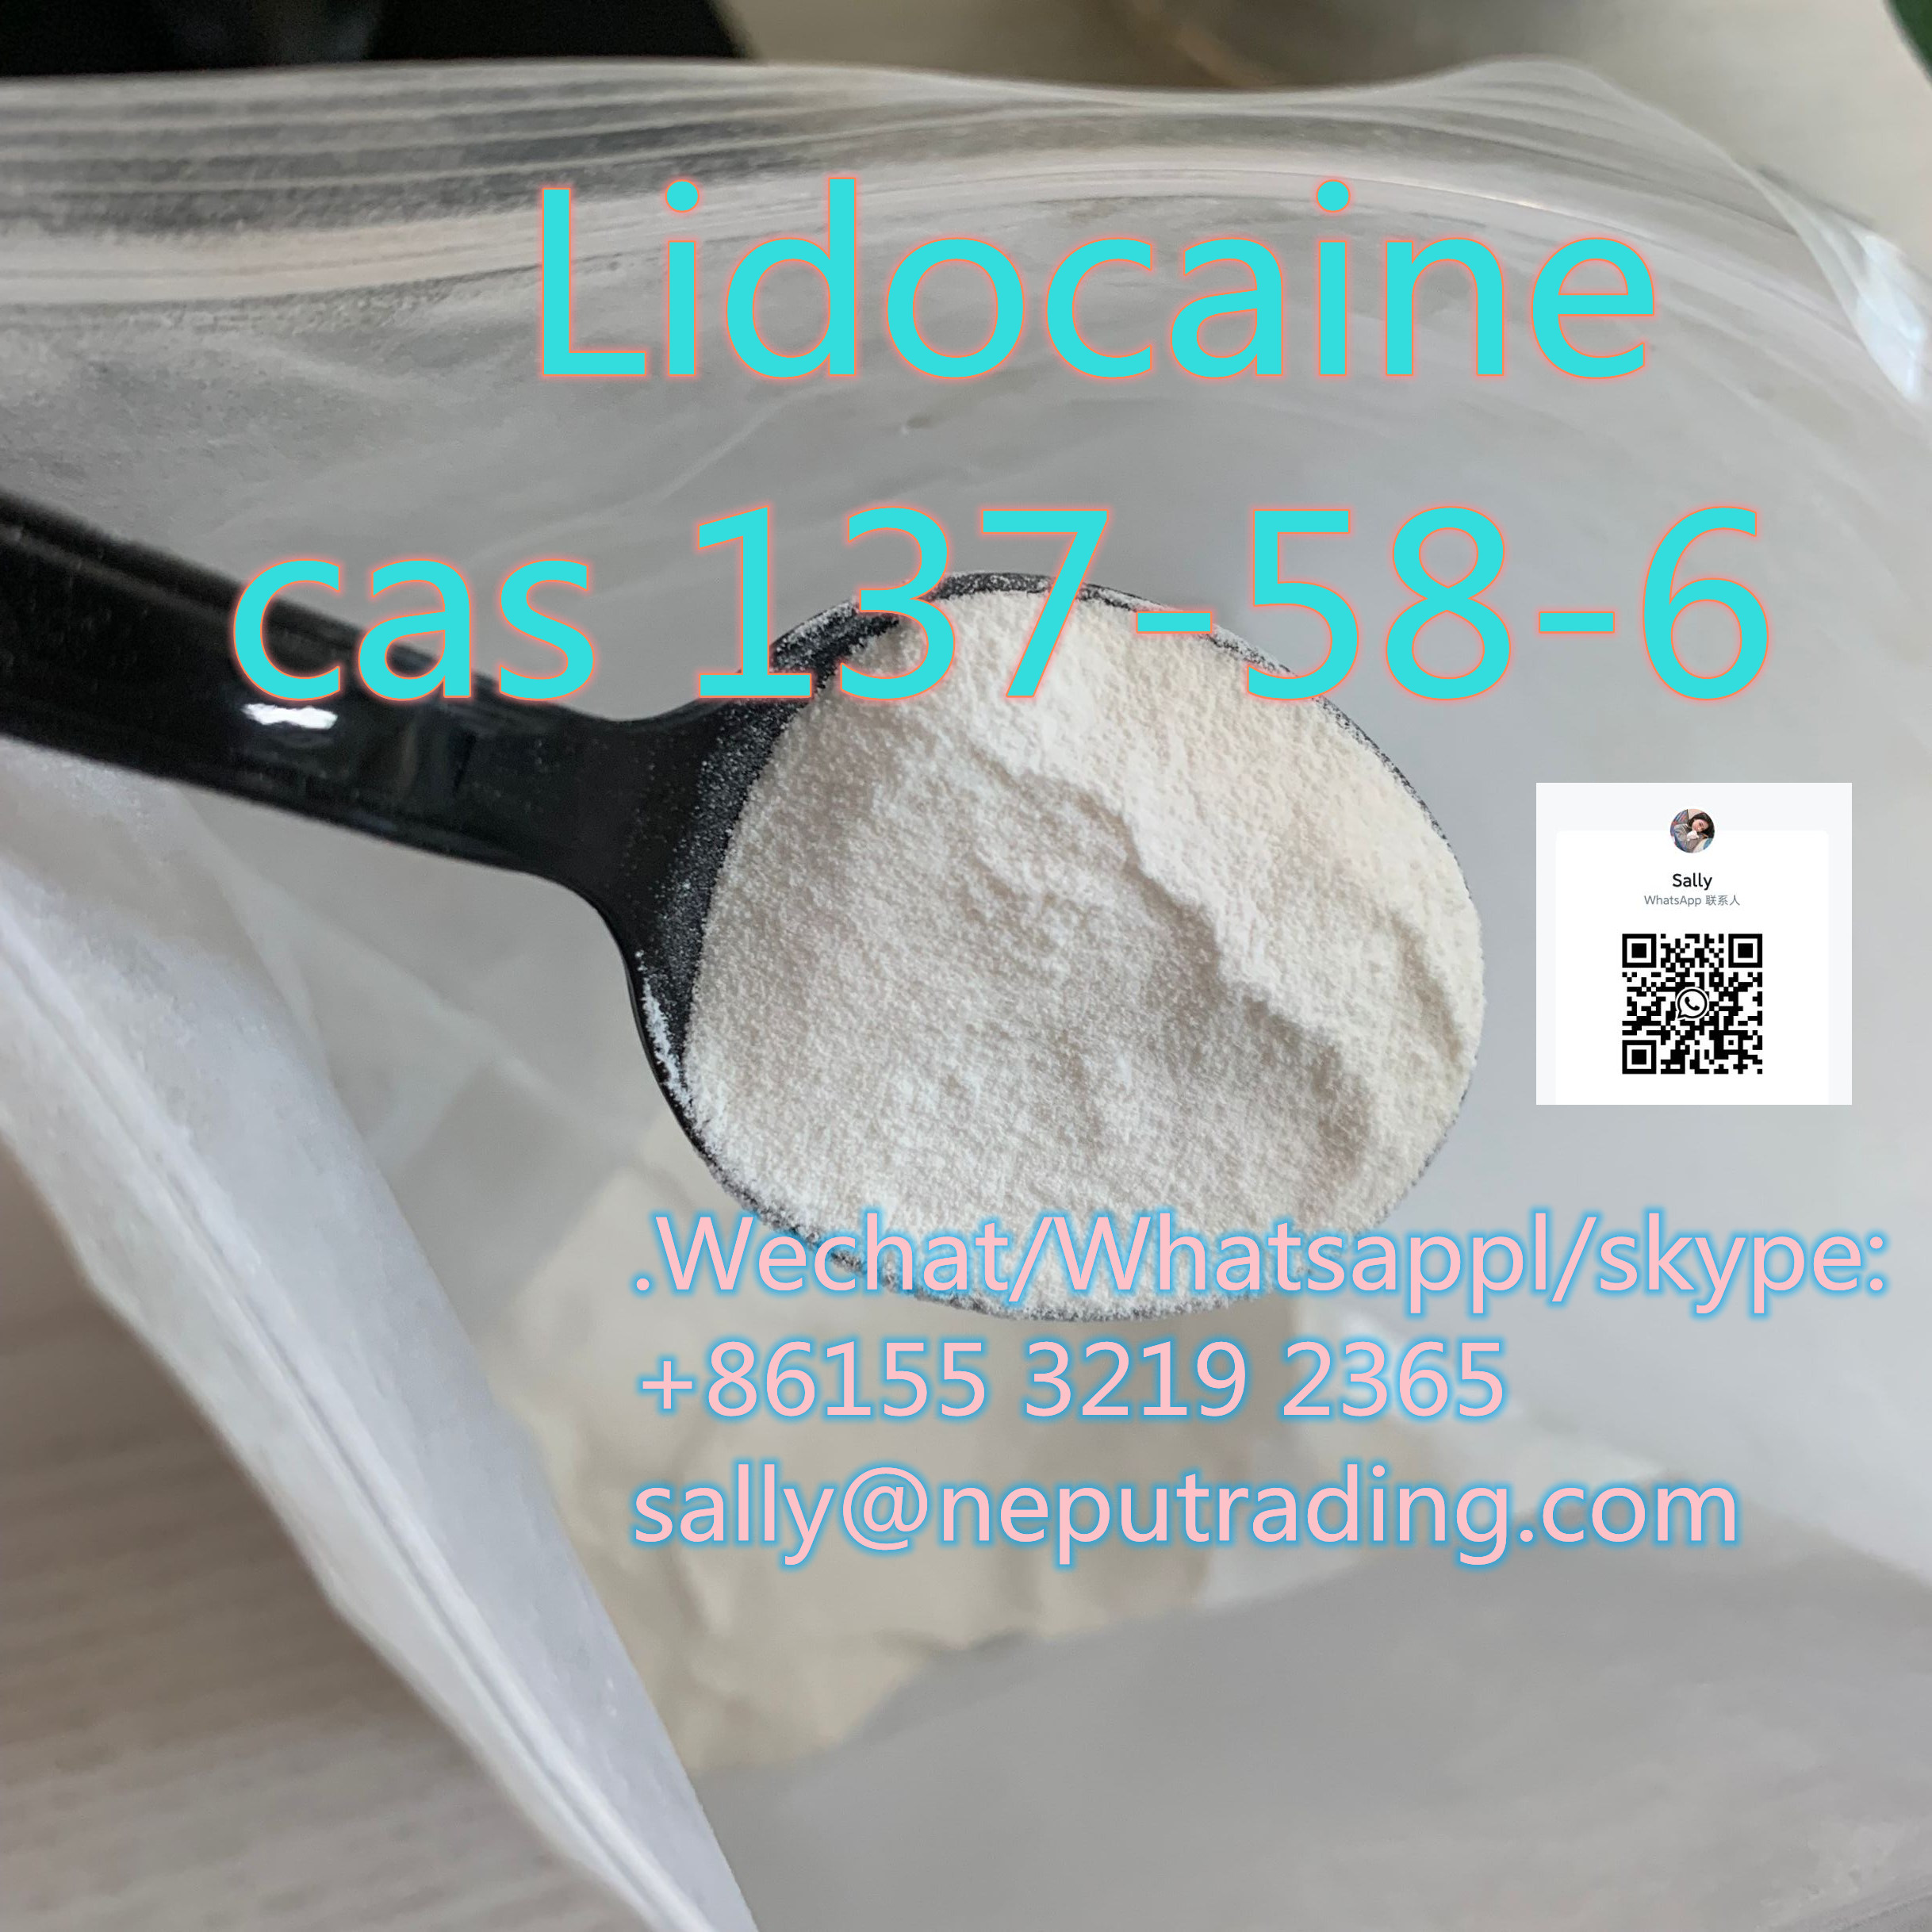 Lidocaine Base Casno 137-58-6 Lidocaine Suppliers From China